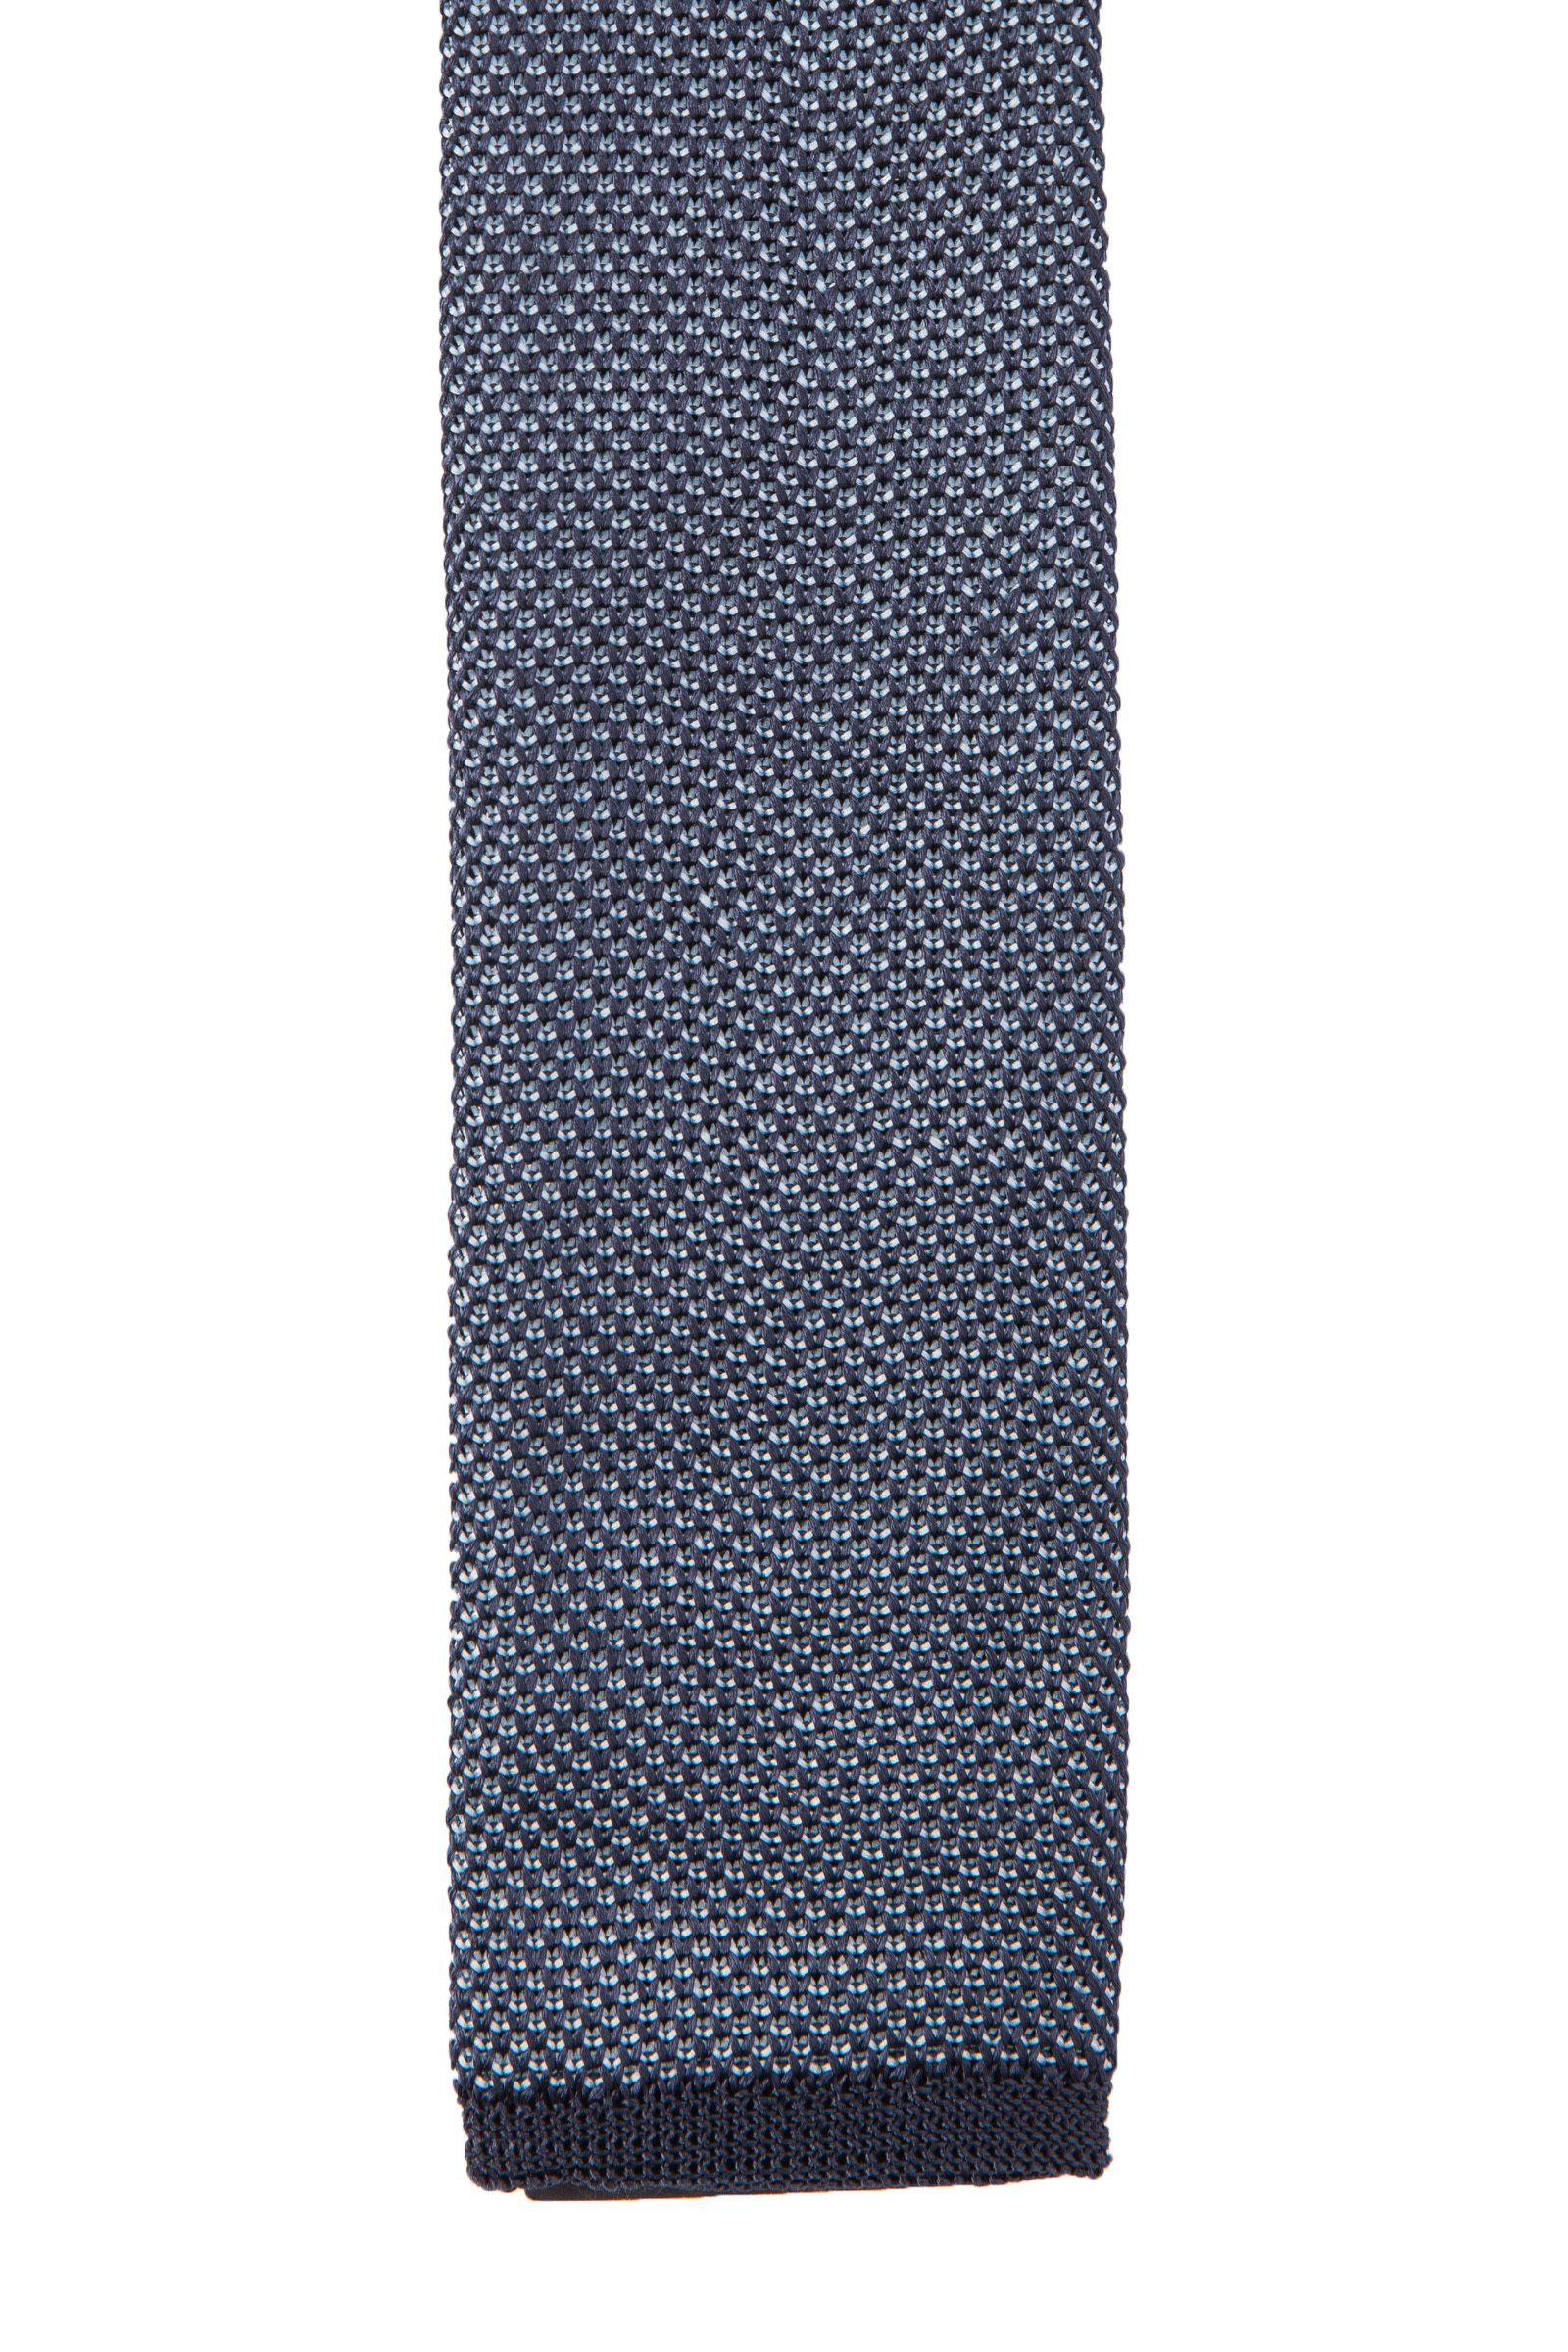 BOSS Krawatte Krawatte (keine Angabe)